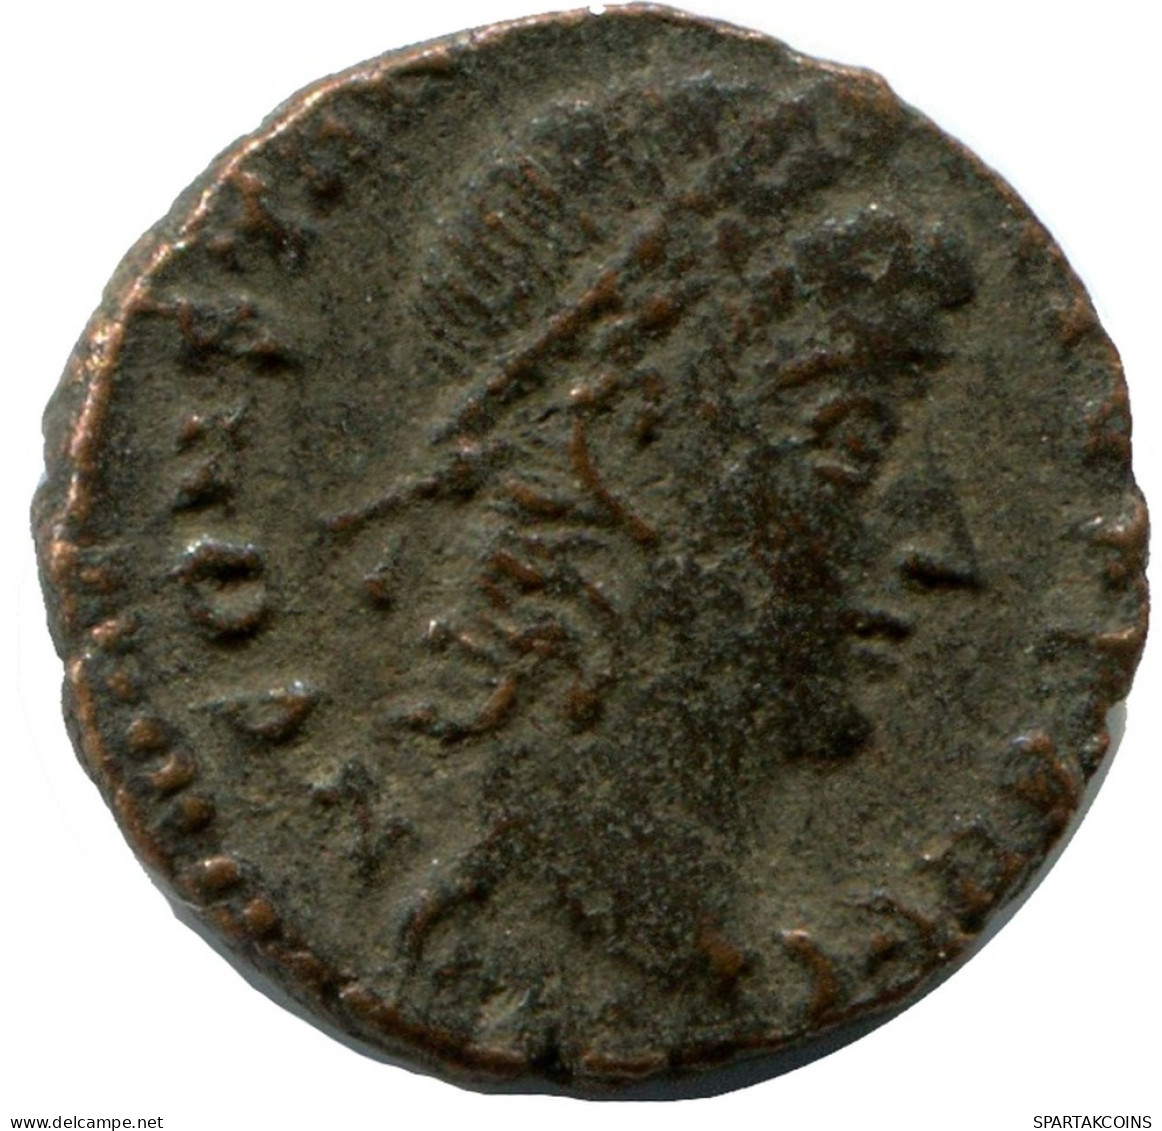 CONSTANTIUS II ALEKSANDRIA FROM THE ROYAL ONTARIO MUSEUM #ANC10497.14.U.A - El Impero Christiano (307 / 363)